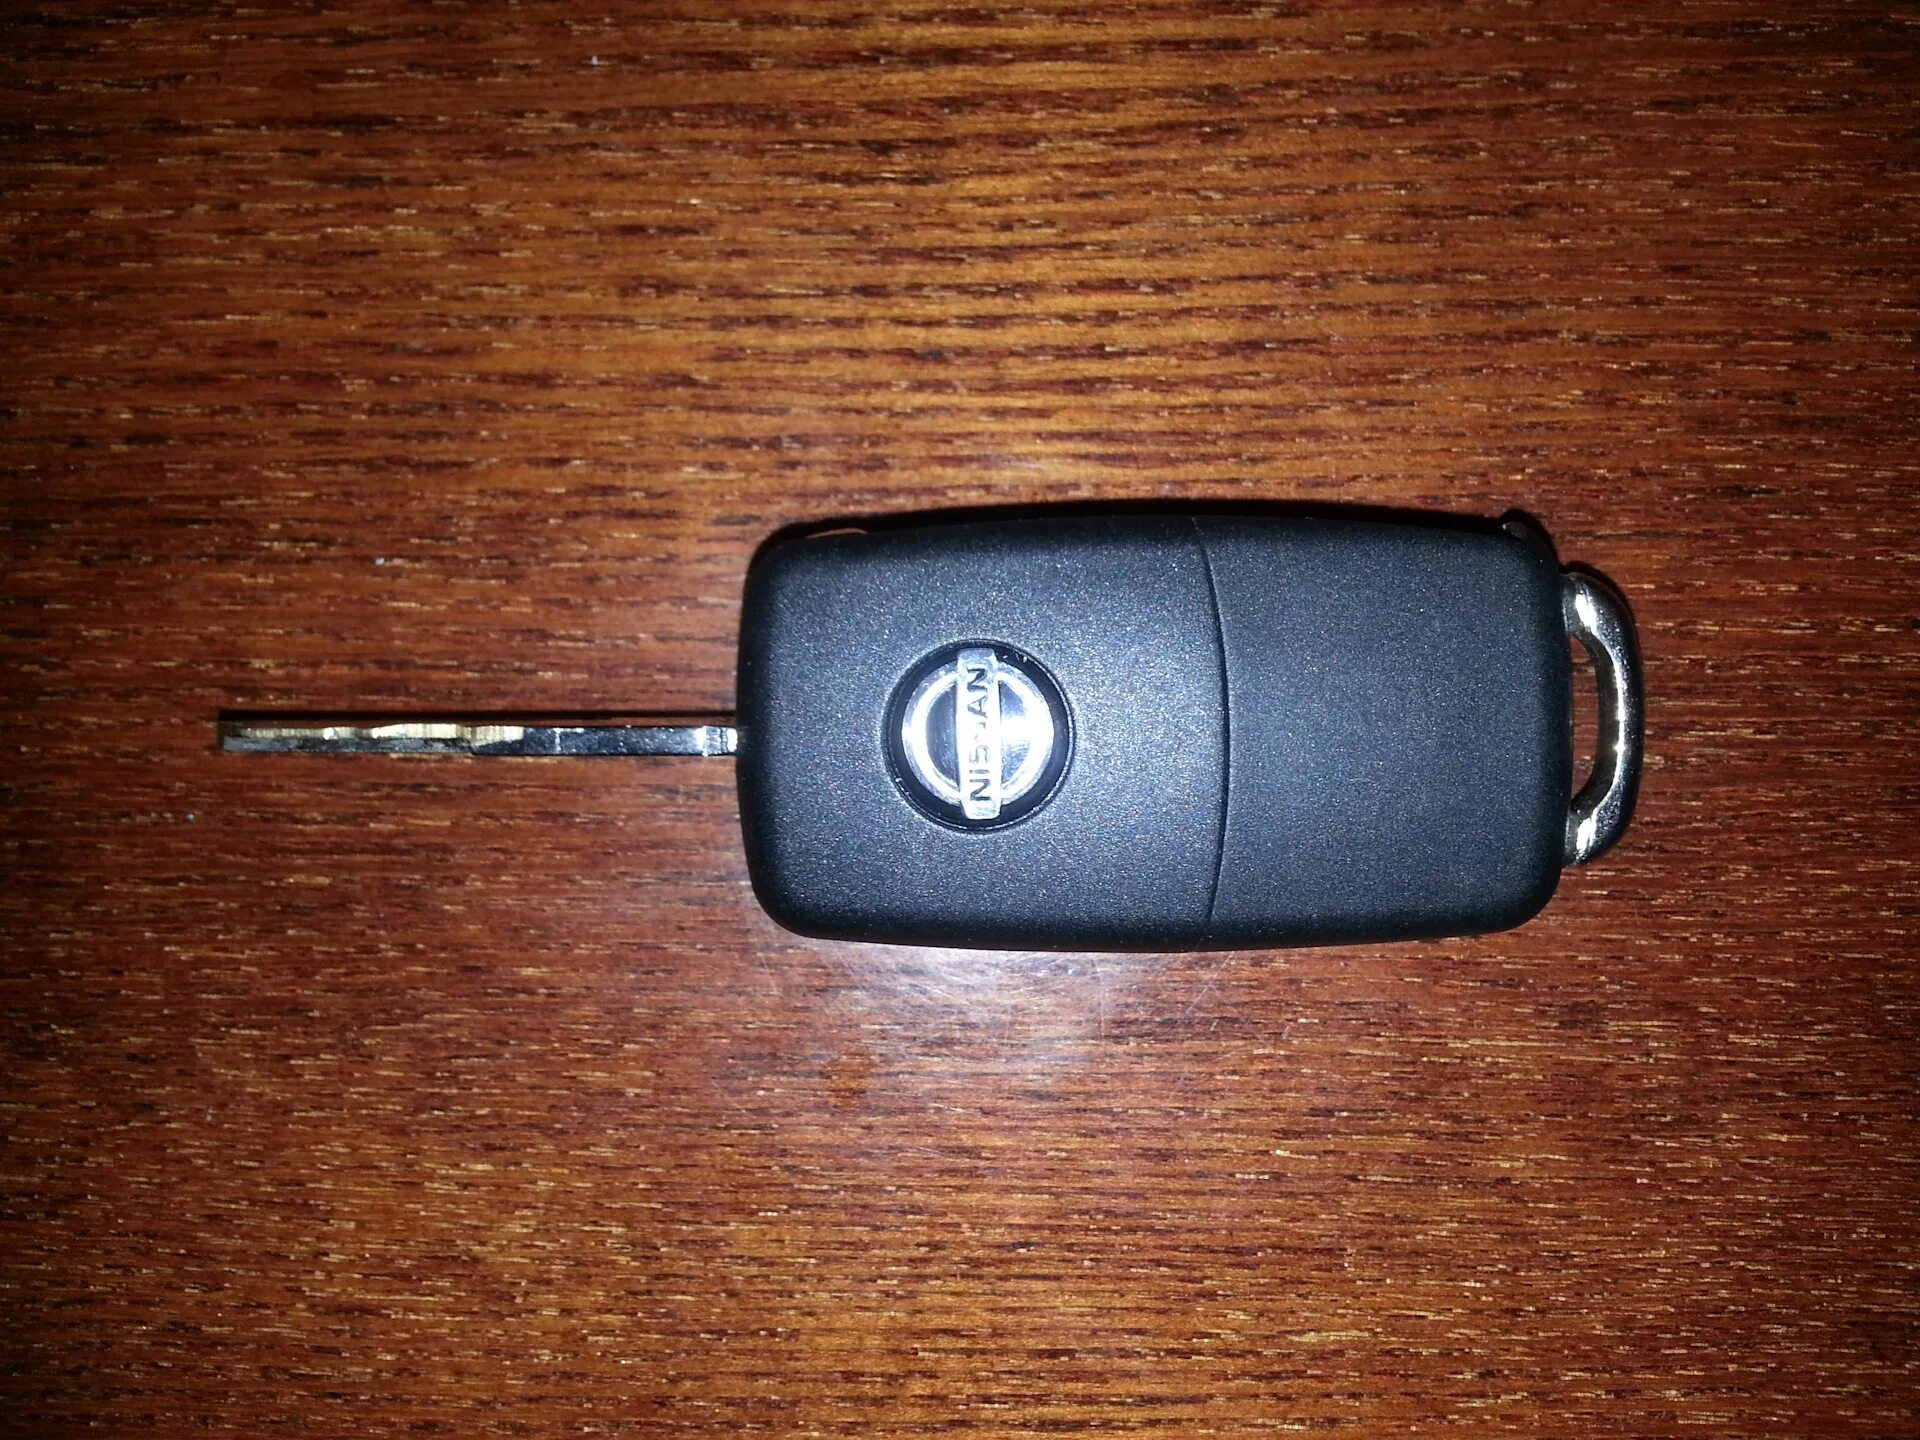 Ключ Nissan Almera g15. Выкидной ключ Ниссан Альмера g15. Ниссан Альмера н16 выкидной ключ. Корпус ключа Ниссан Альмера g15 артикул.